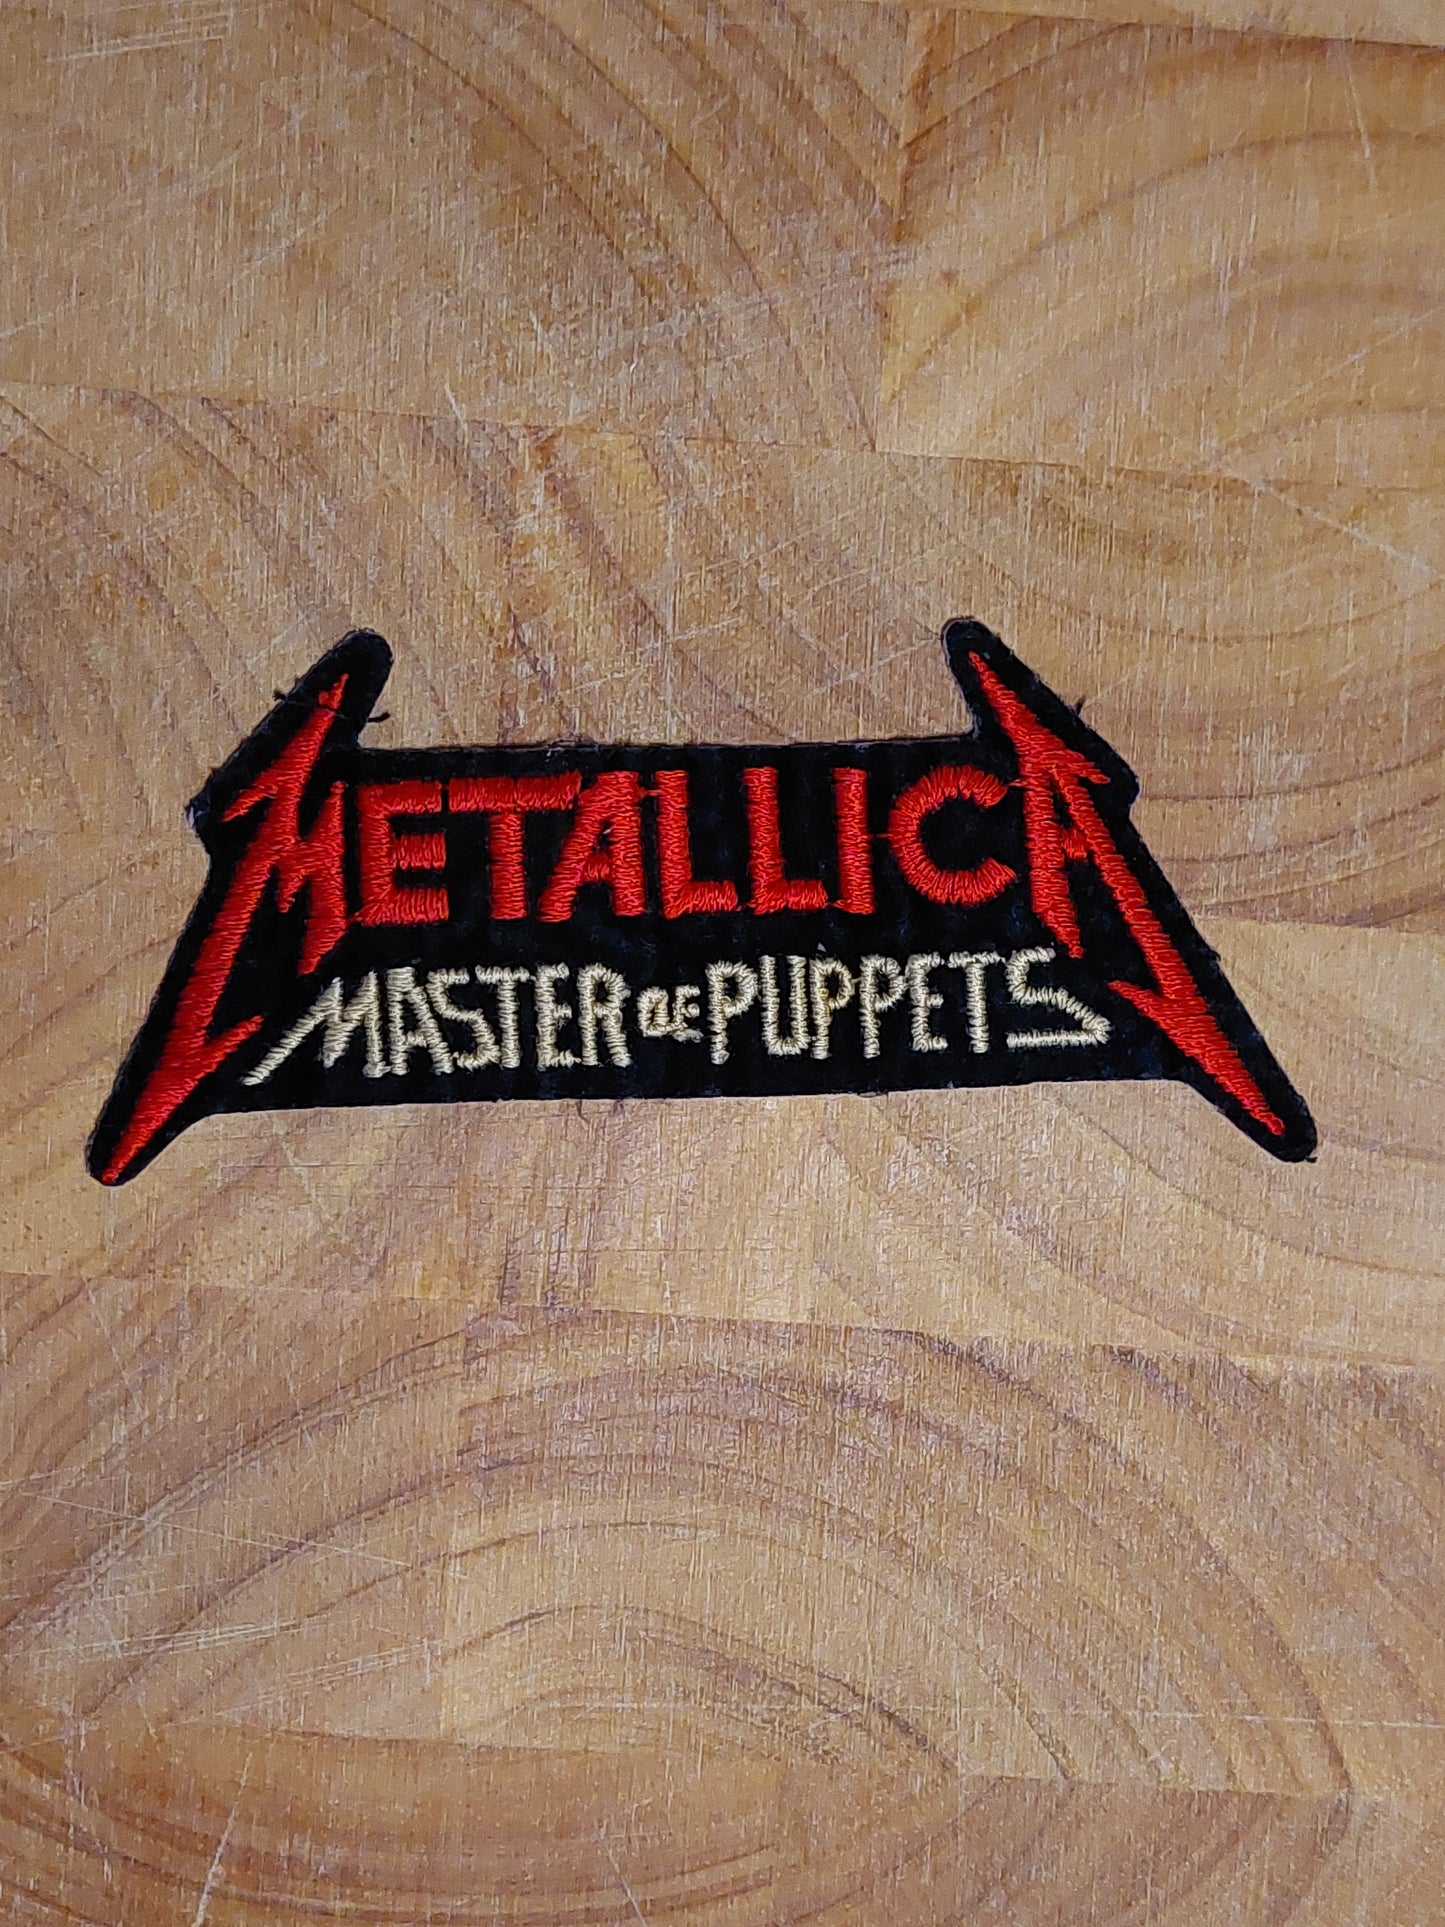 Metallica master of puppets